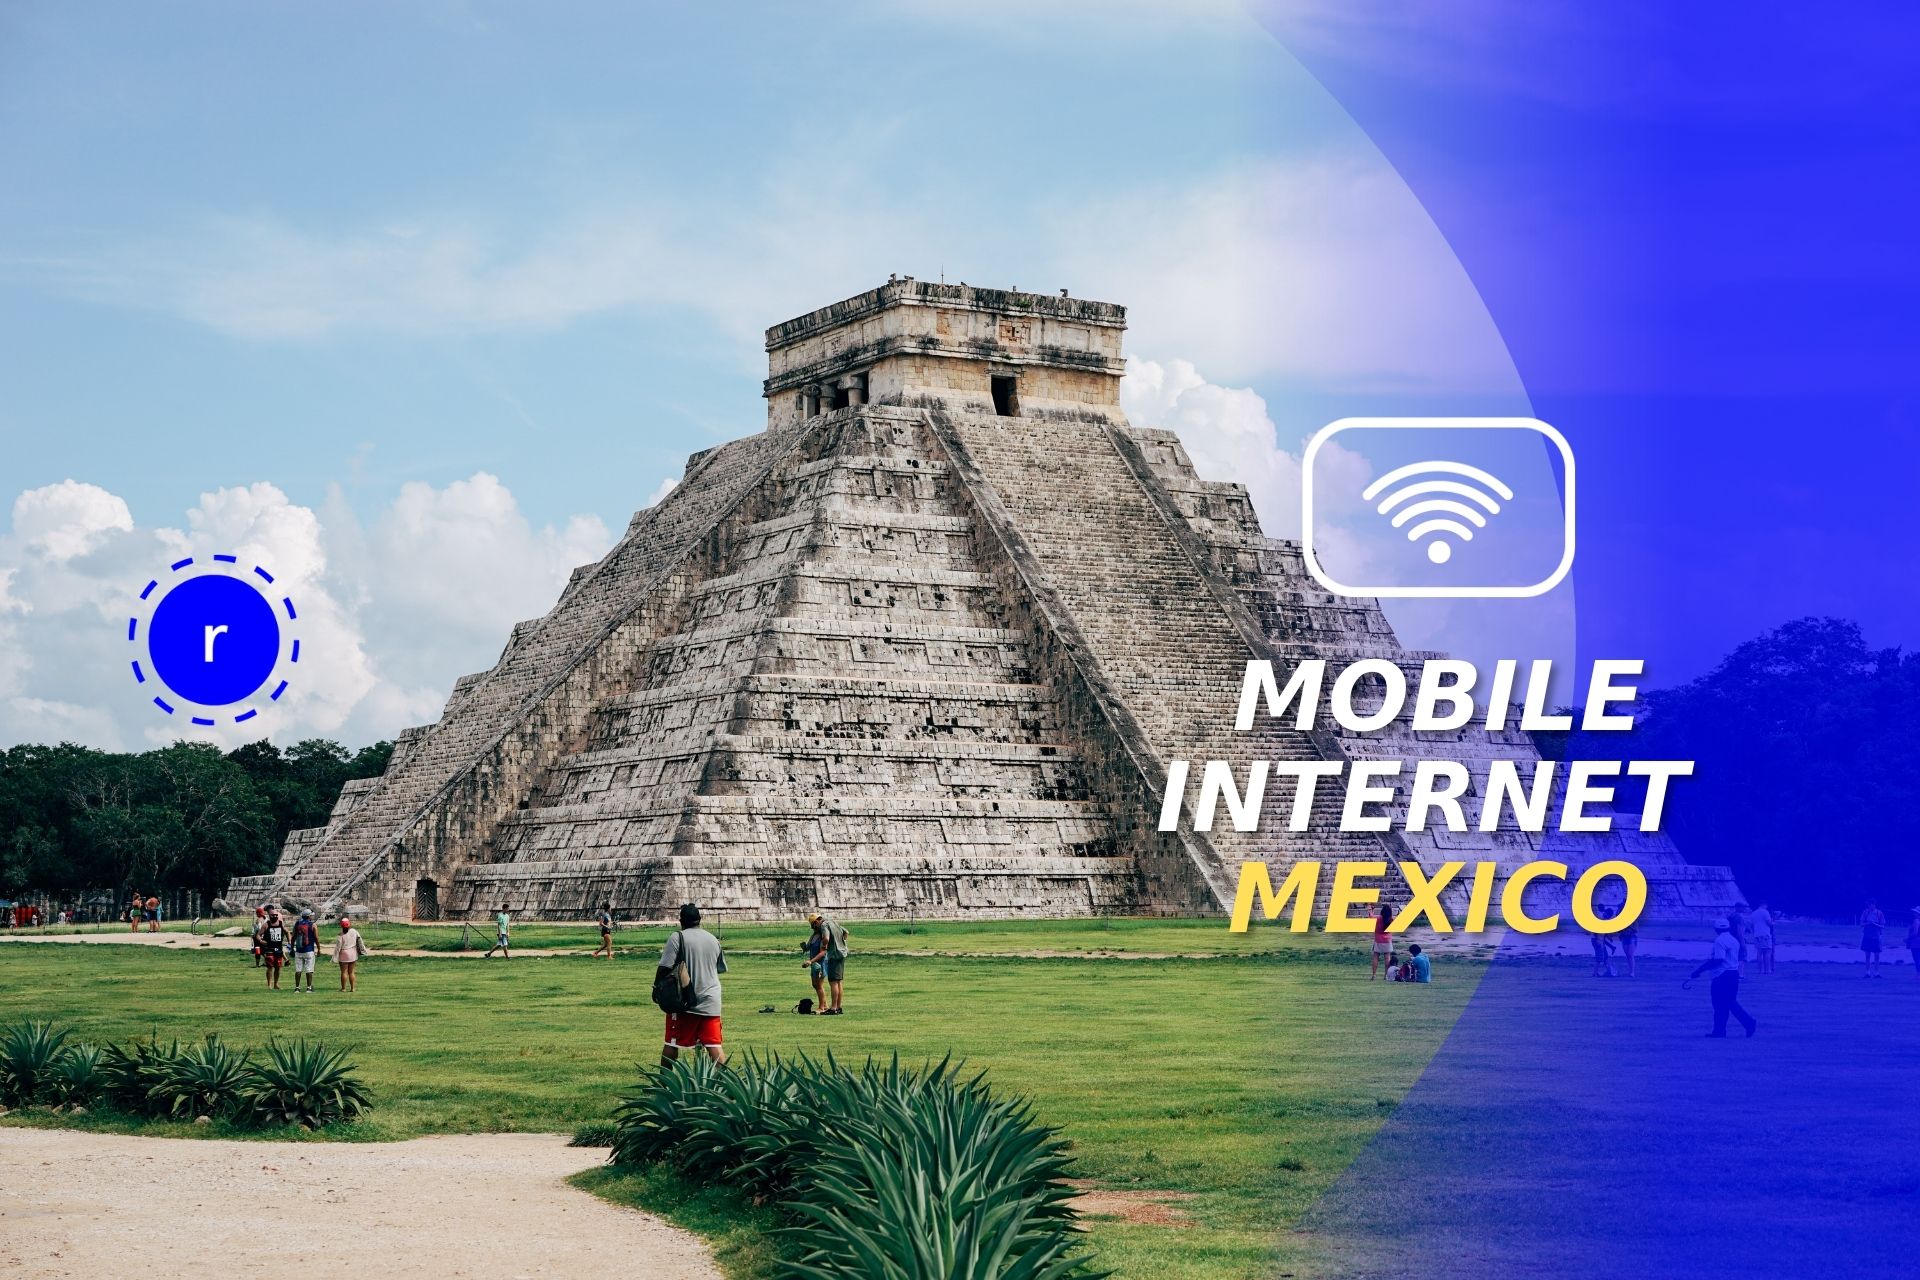 MOBILE INTERNET MEXICO